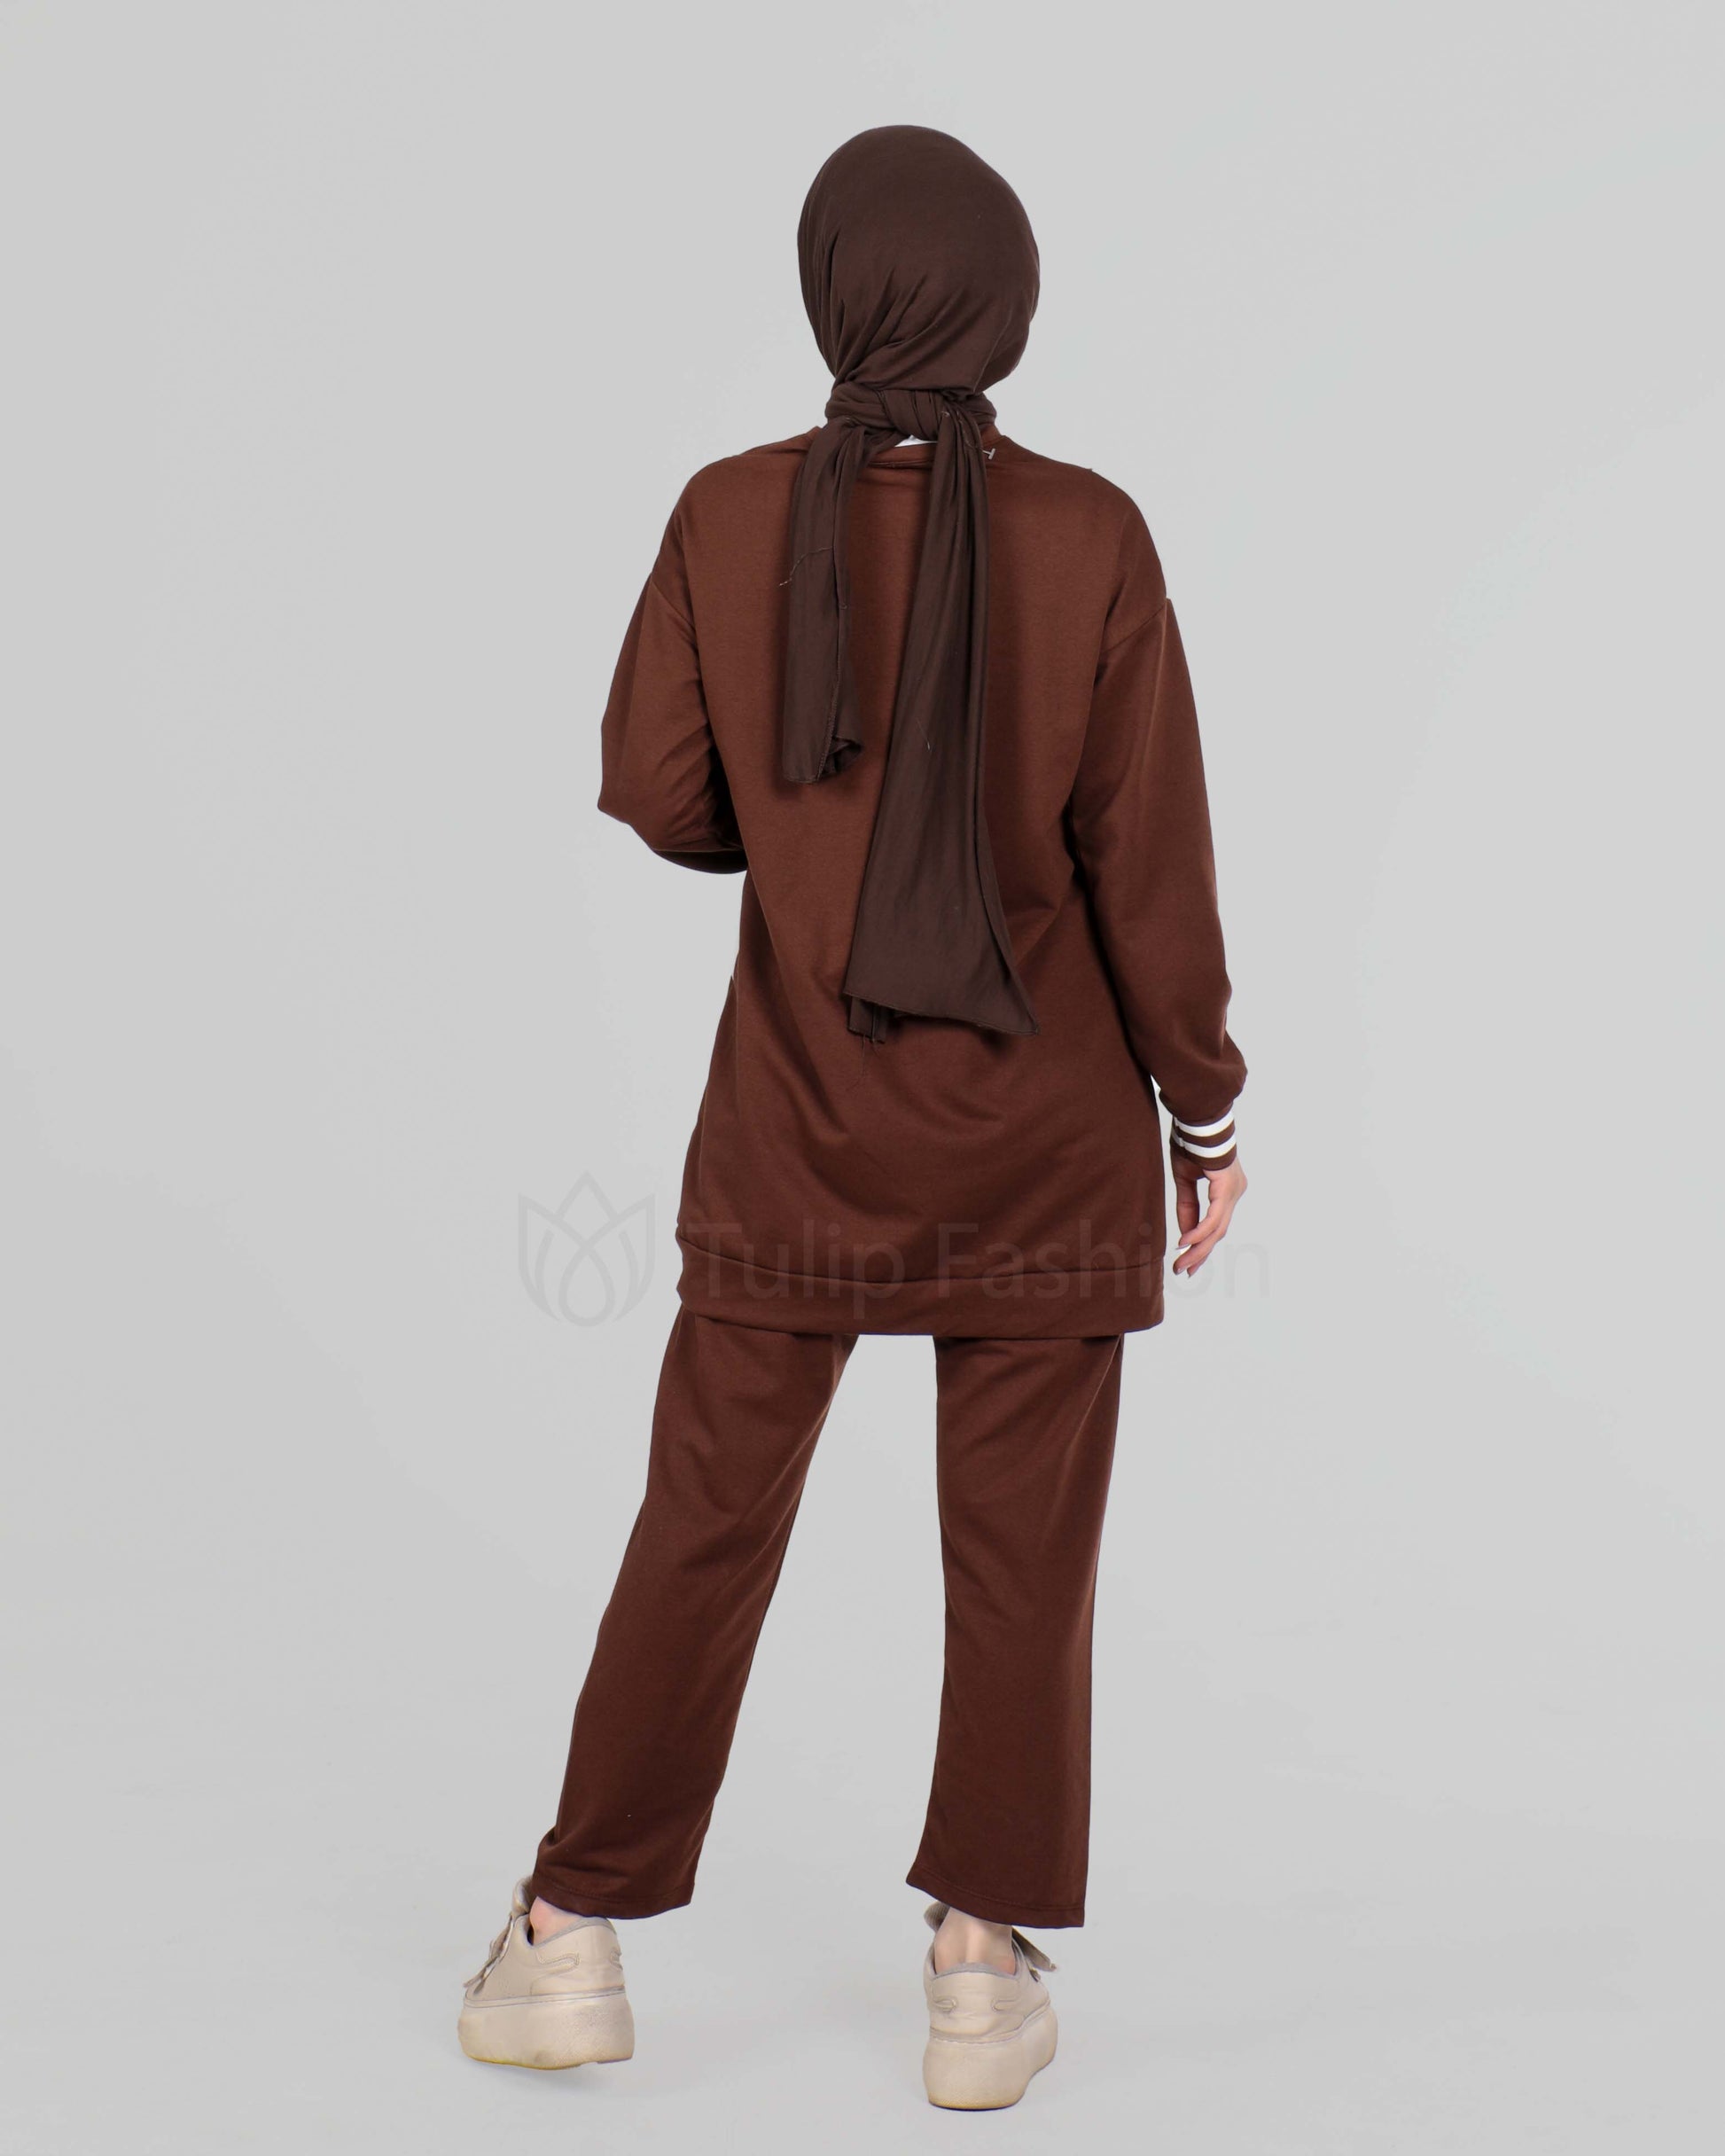 Tunic set with pants - Brown